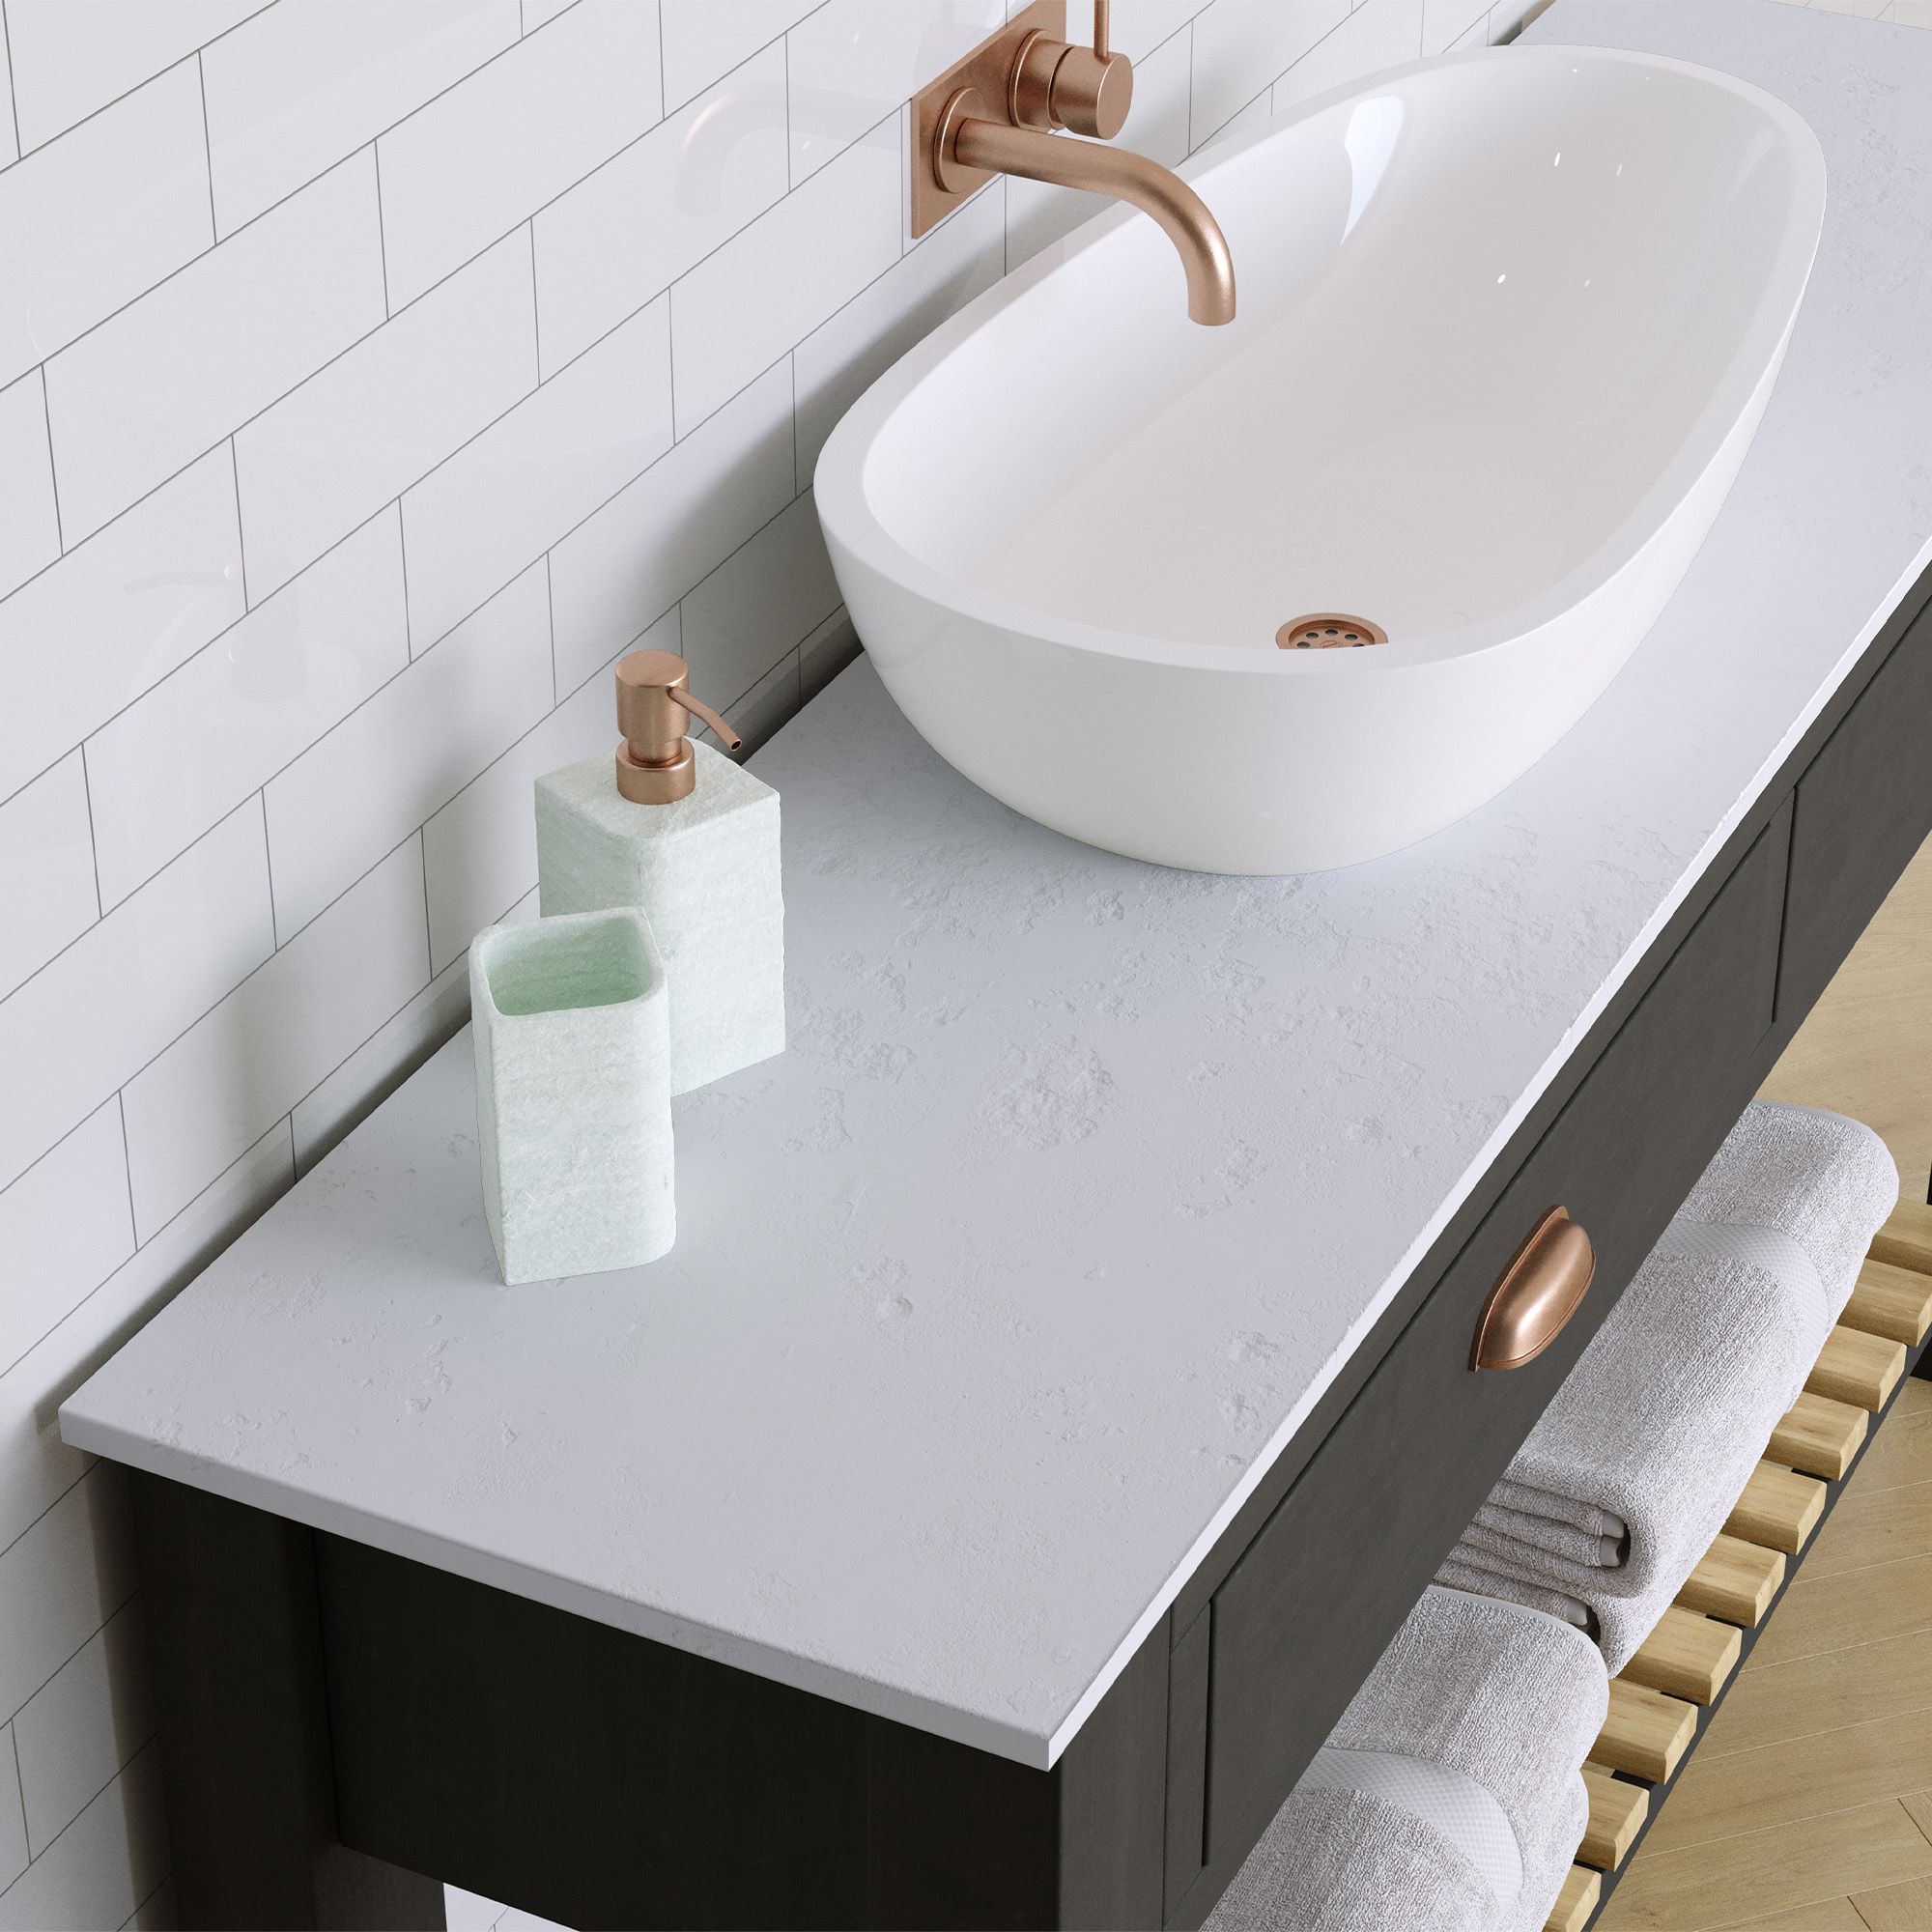 Matt White Stone effect Chamfered straight edge Solid core laminate Bathroom Worktop (T) 1.2cm x (L) 122cm x (W) 38.5cm